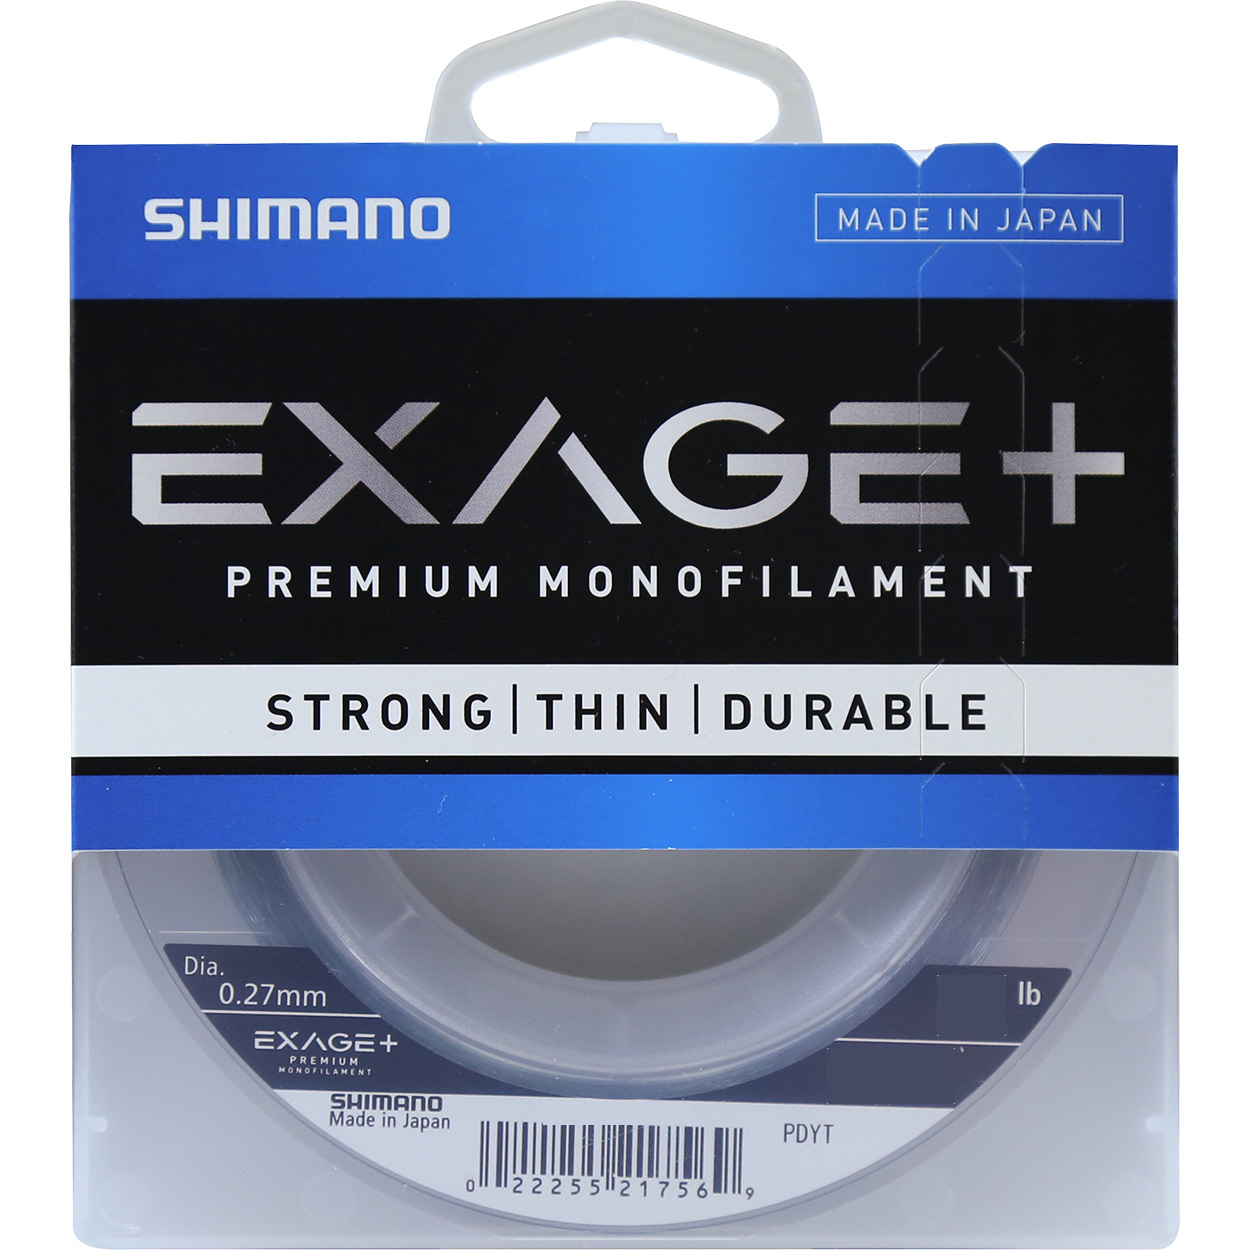  Monofilament Fishing Line Premium Spool X-Strong